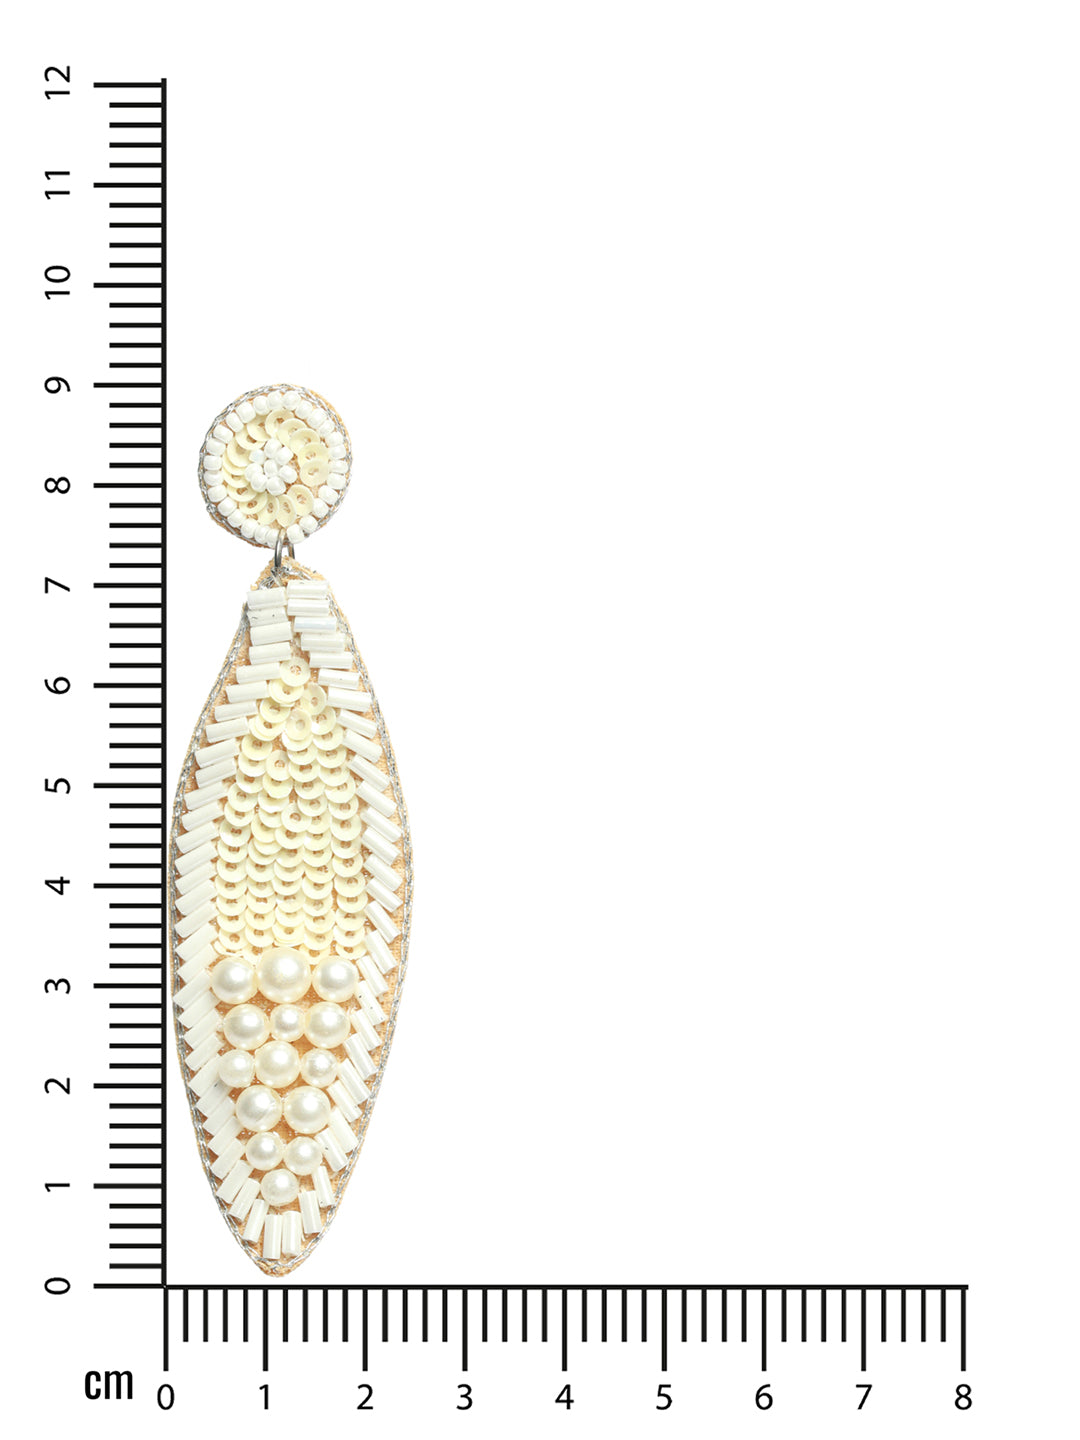 White & Gold-Toned Teardrop Handcrafted Beaded & Pearl Work Drop Earrings